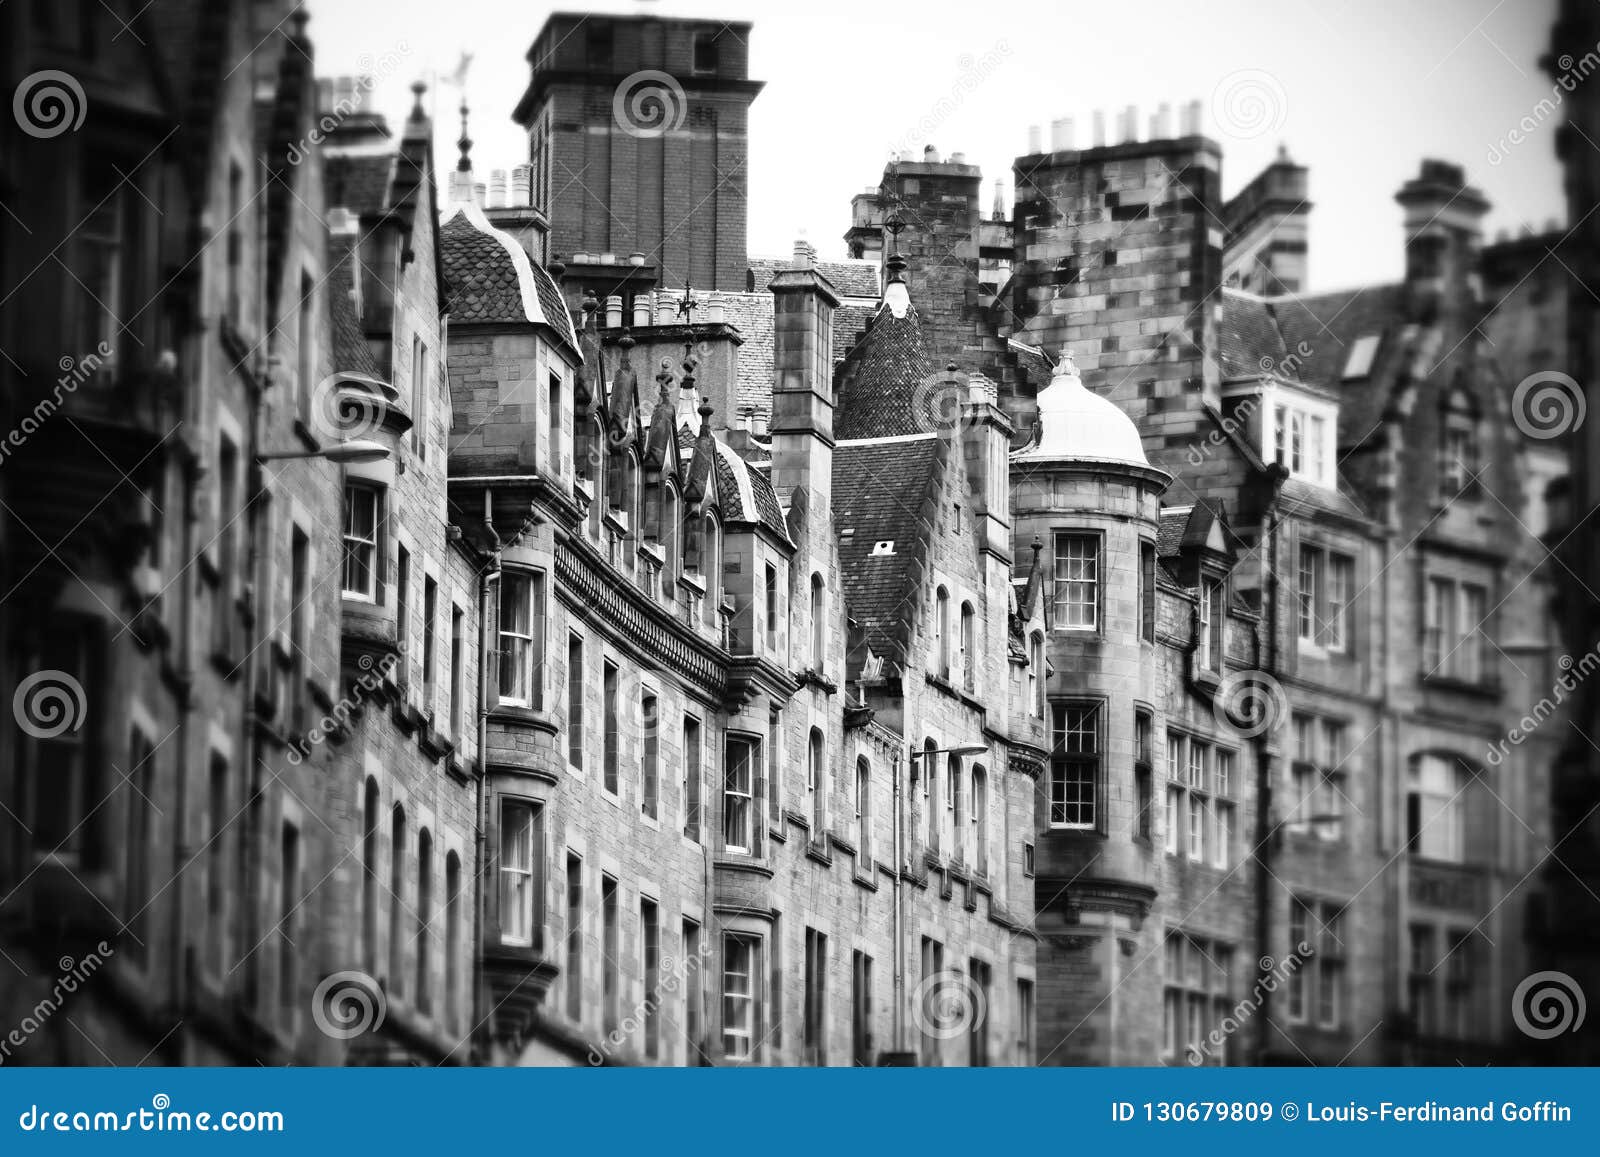 old facades perpective in edinburgh street, scotland